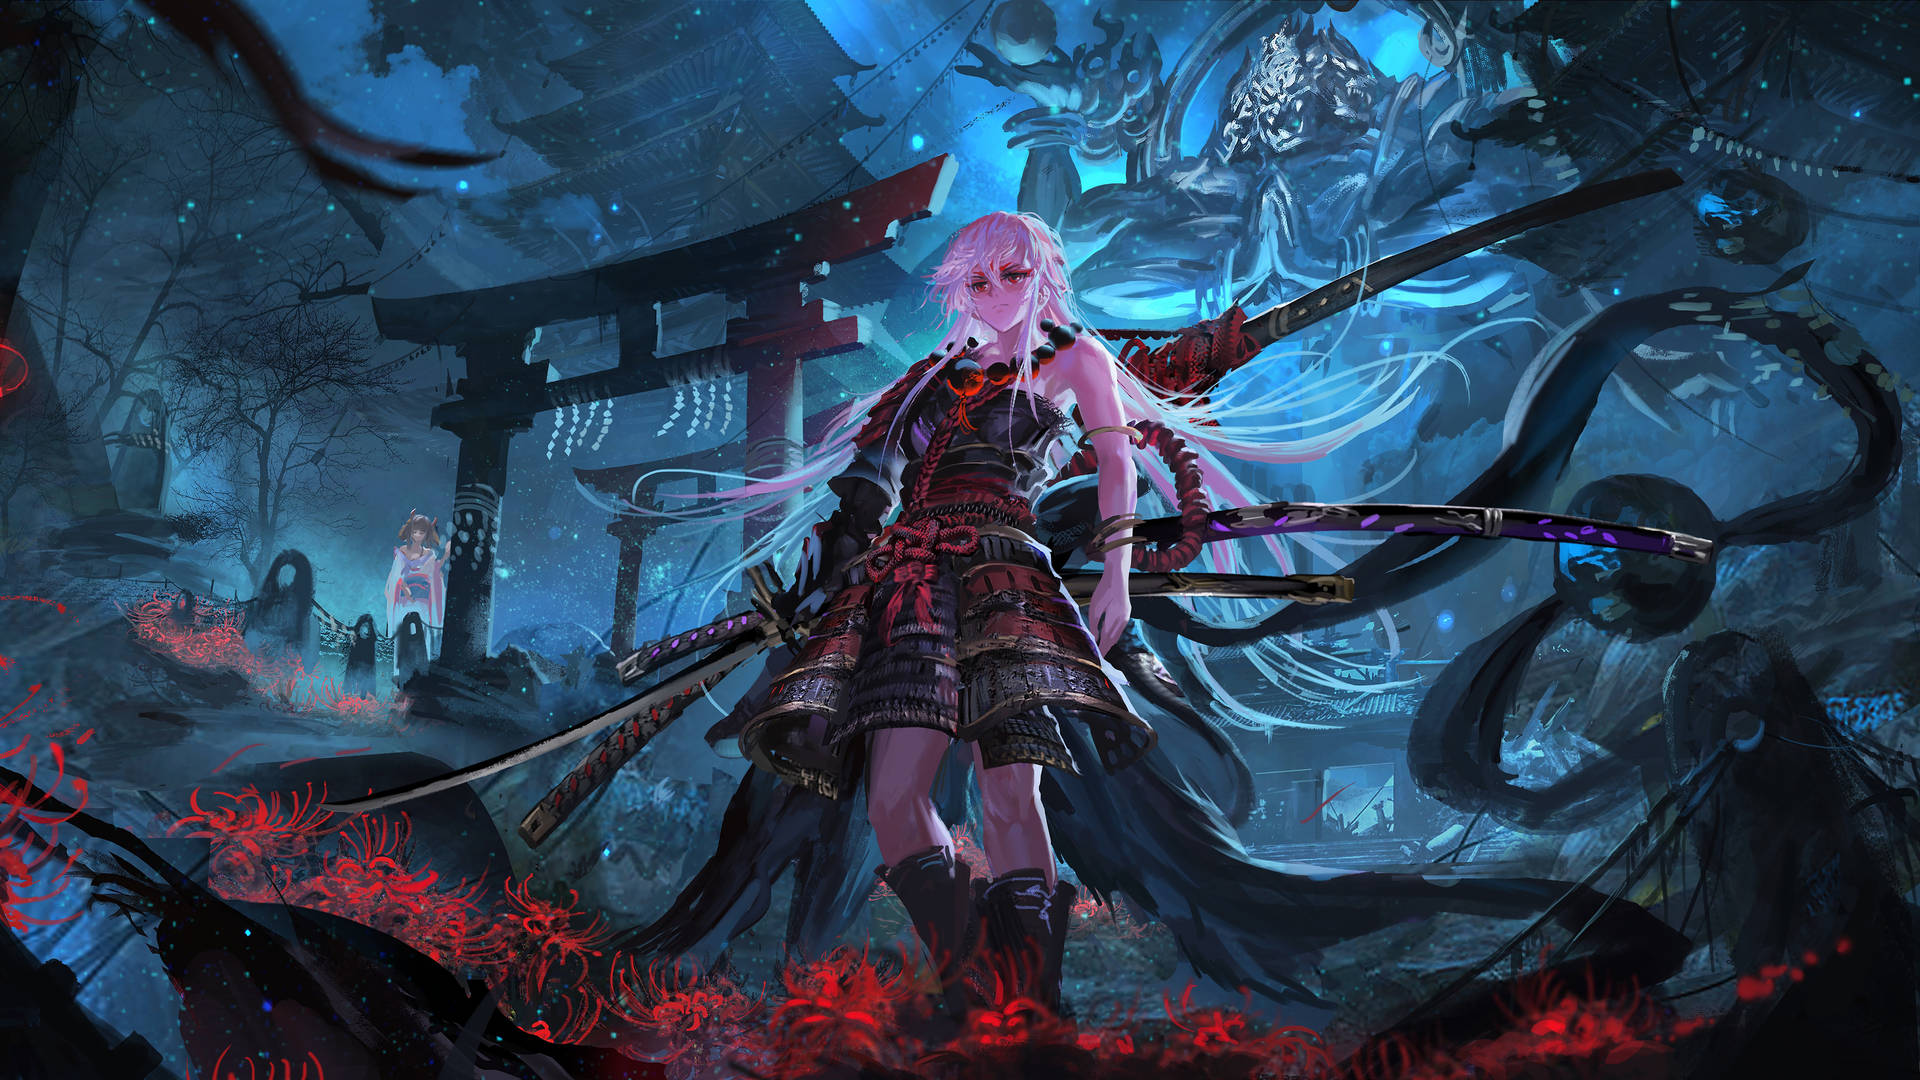 Cool Samurai Anime Girl Picture